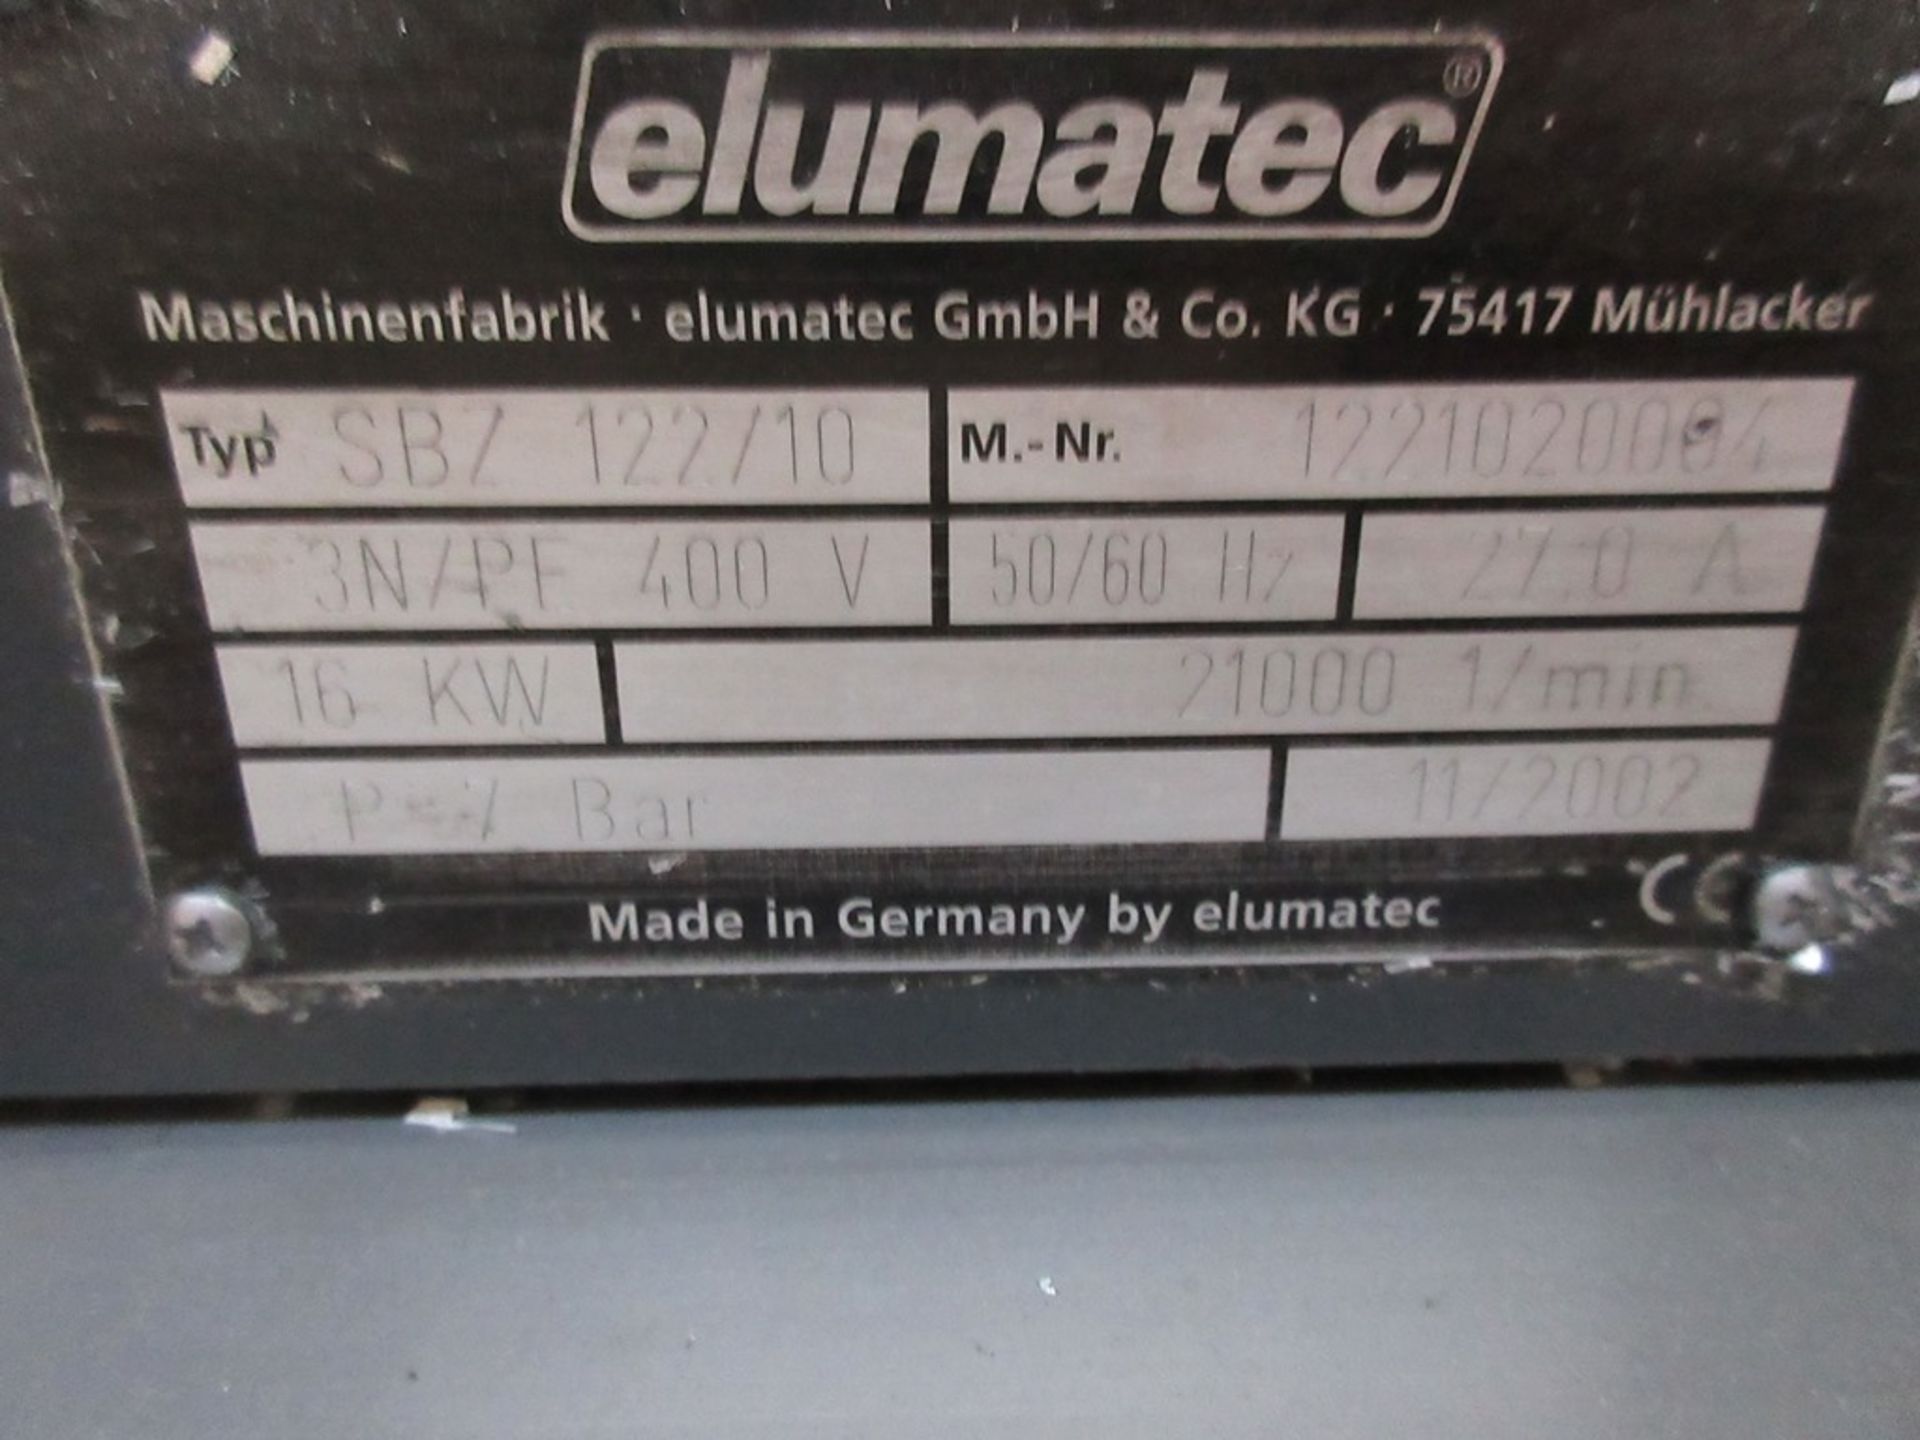 Elumatec SBZ122/10 CNC Profile machining centre (2002) - Image 12 of 16